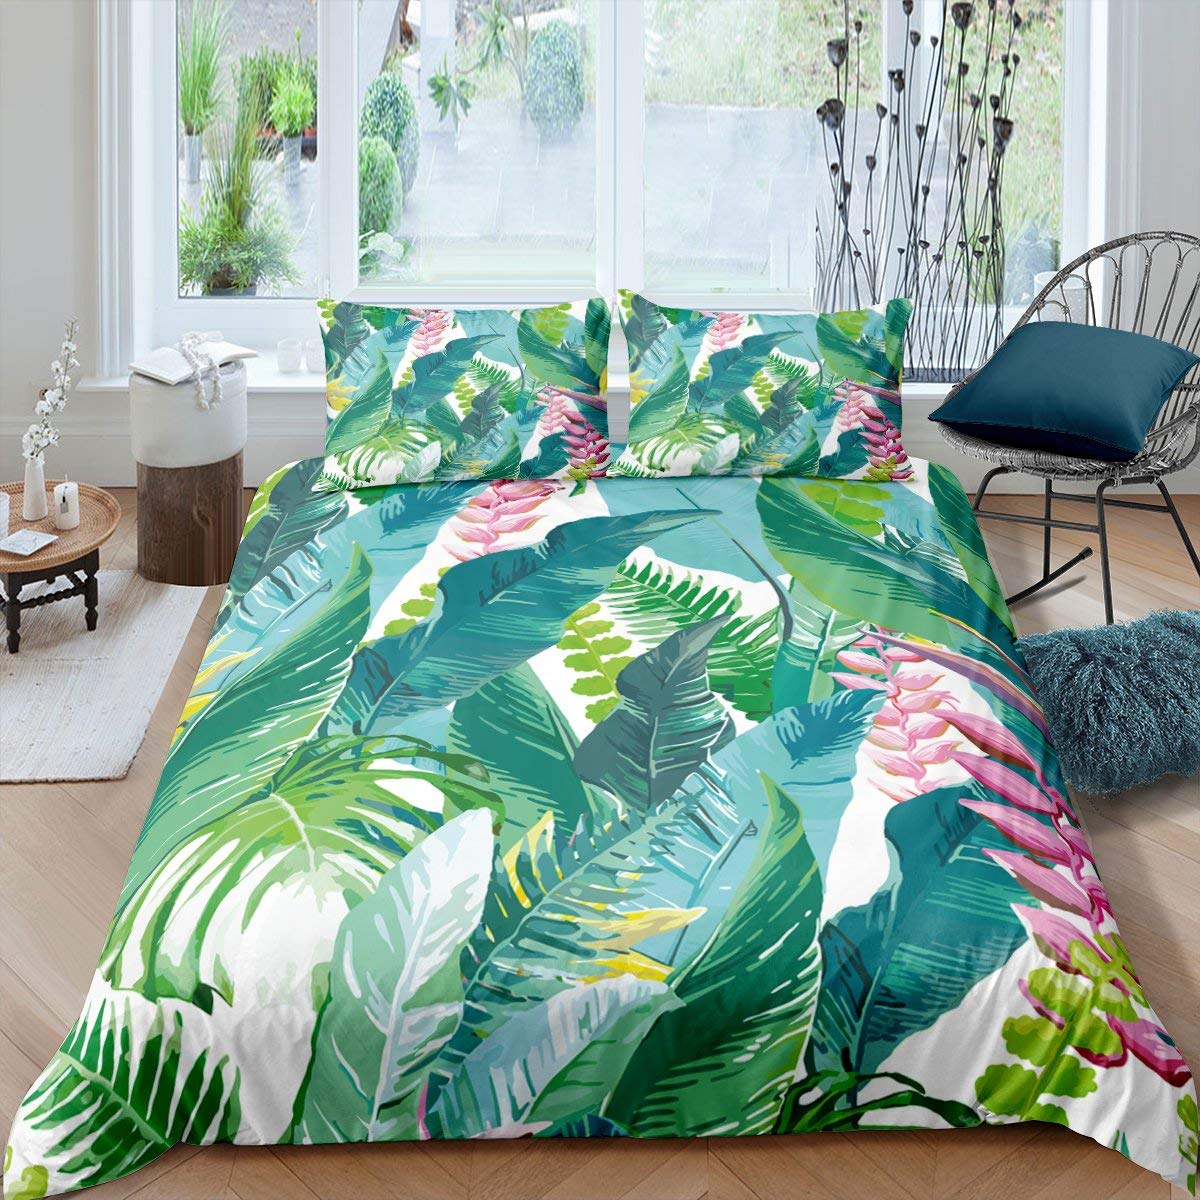 Exotic tropical duvet cover